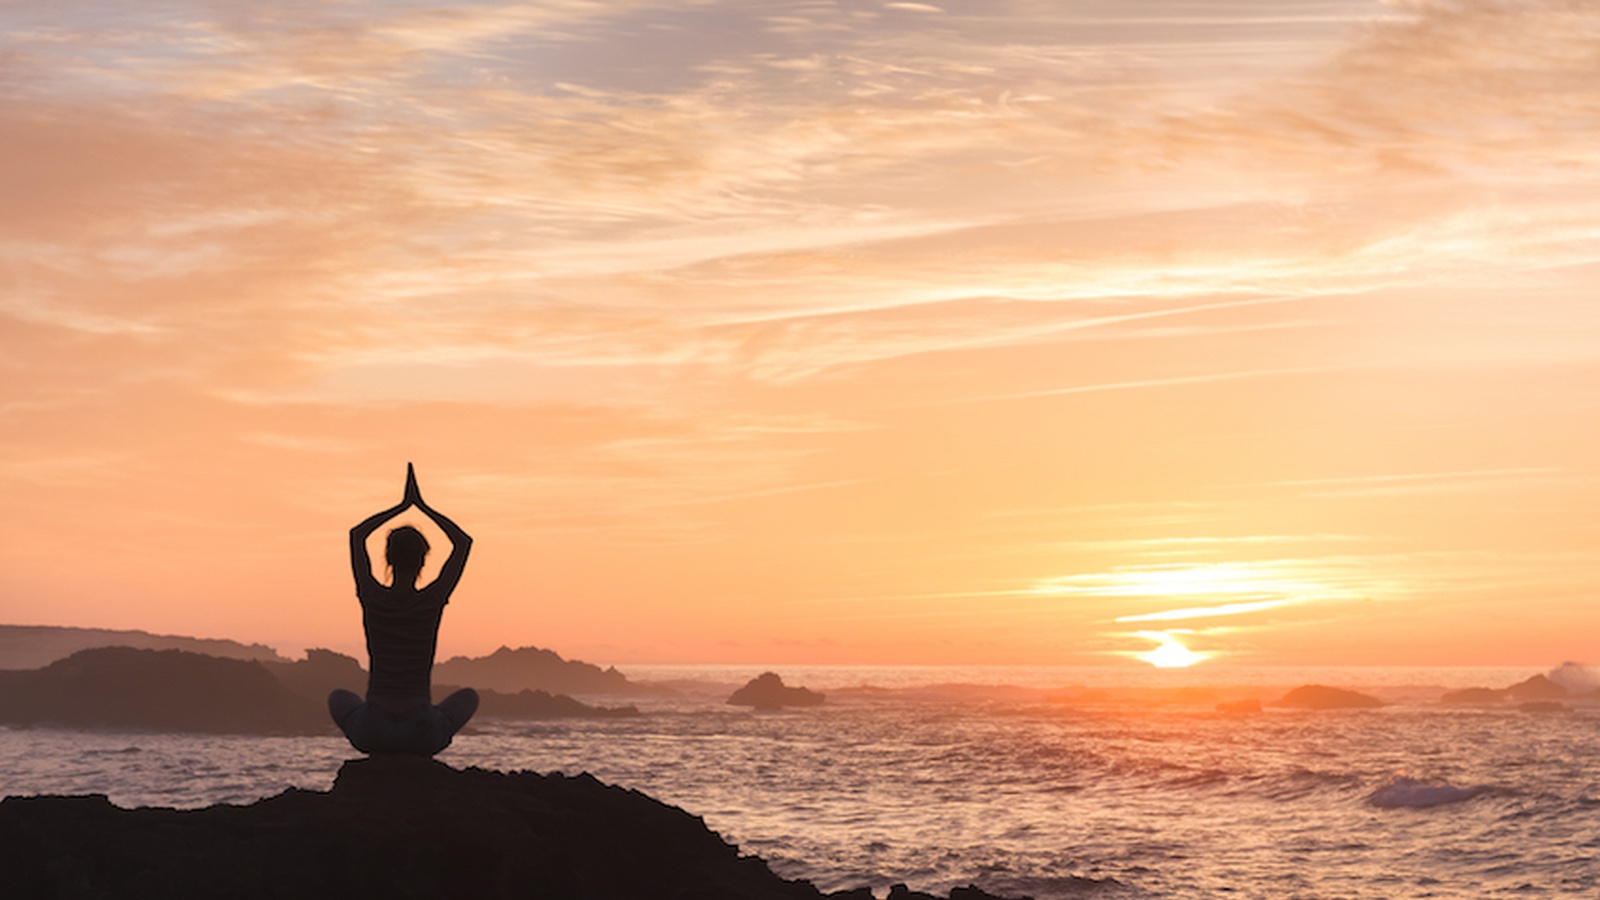 Expert Yogi: Here are 5 Pro-Anxiety Habits You Need to Break